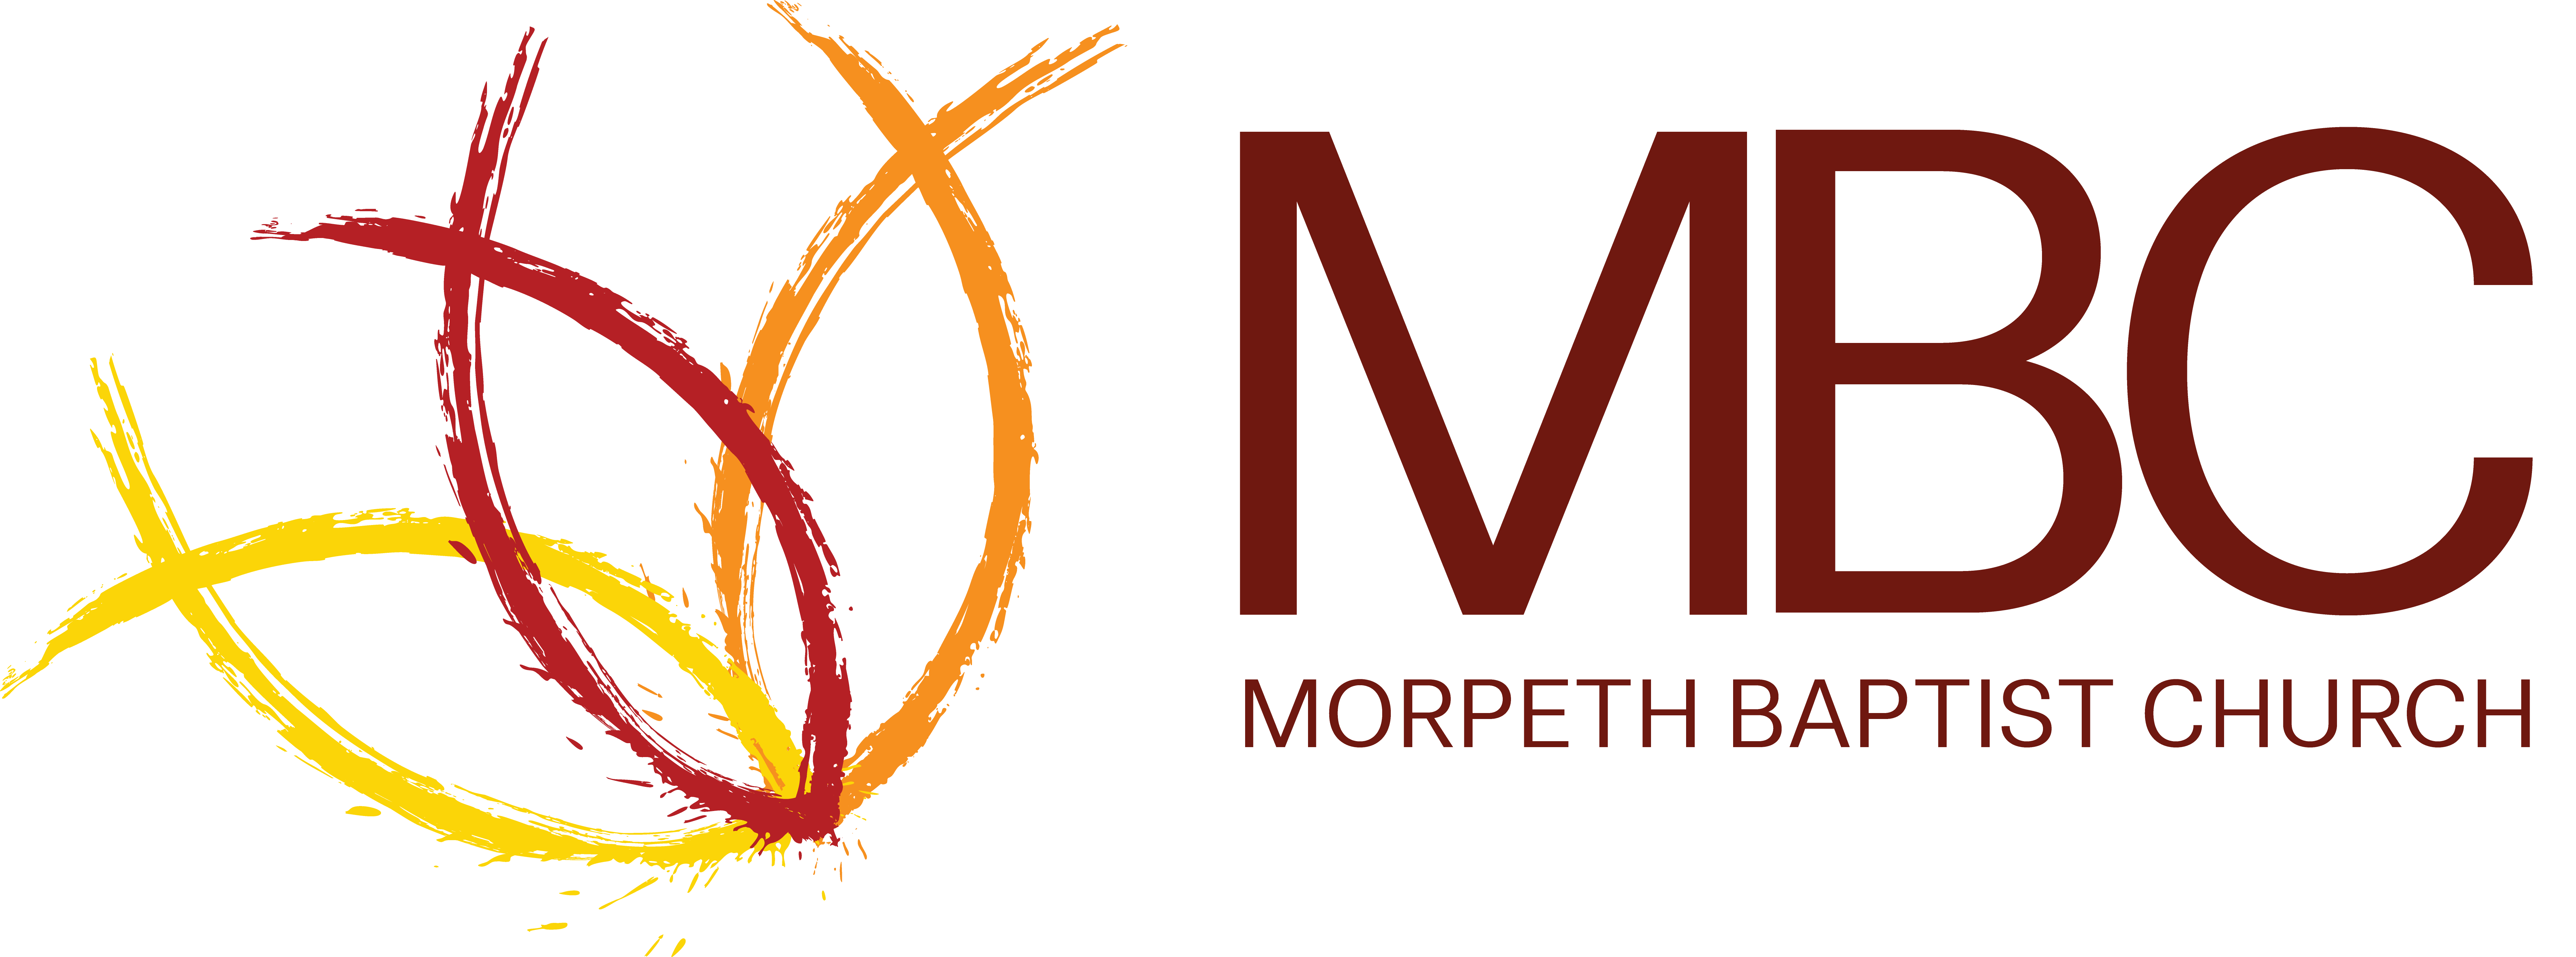 morpeth baptist church logo